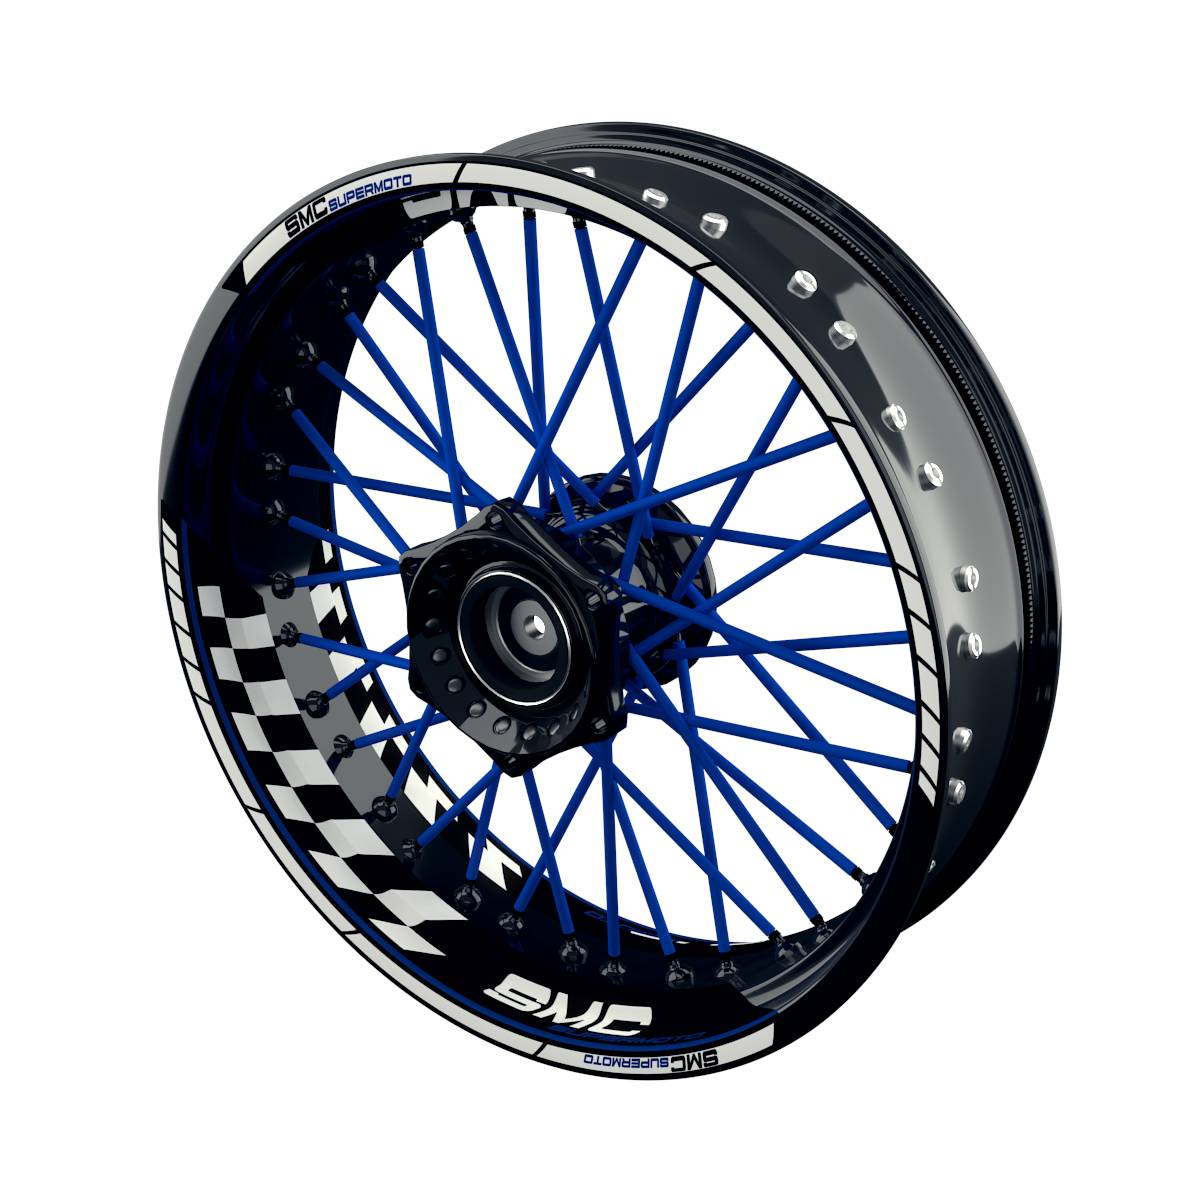 SMC Supermoto GRID Felgenaufkleber Wheelsticker Premium geteilt